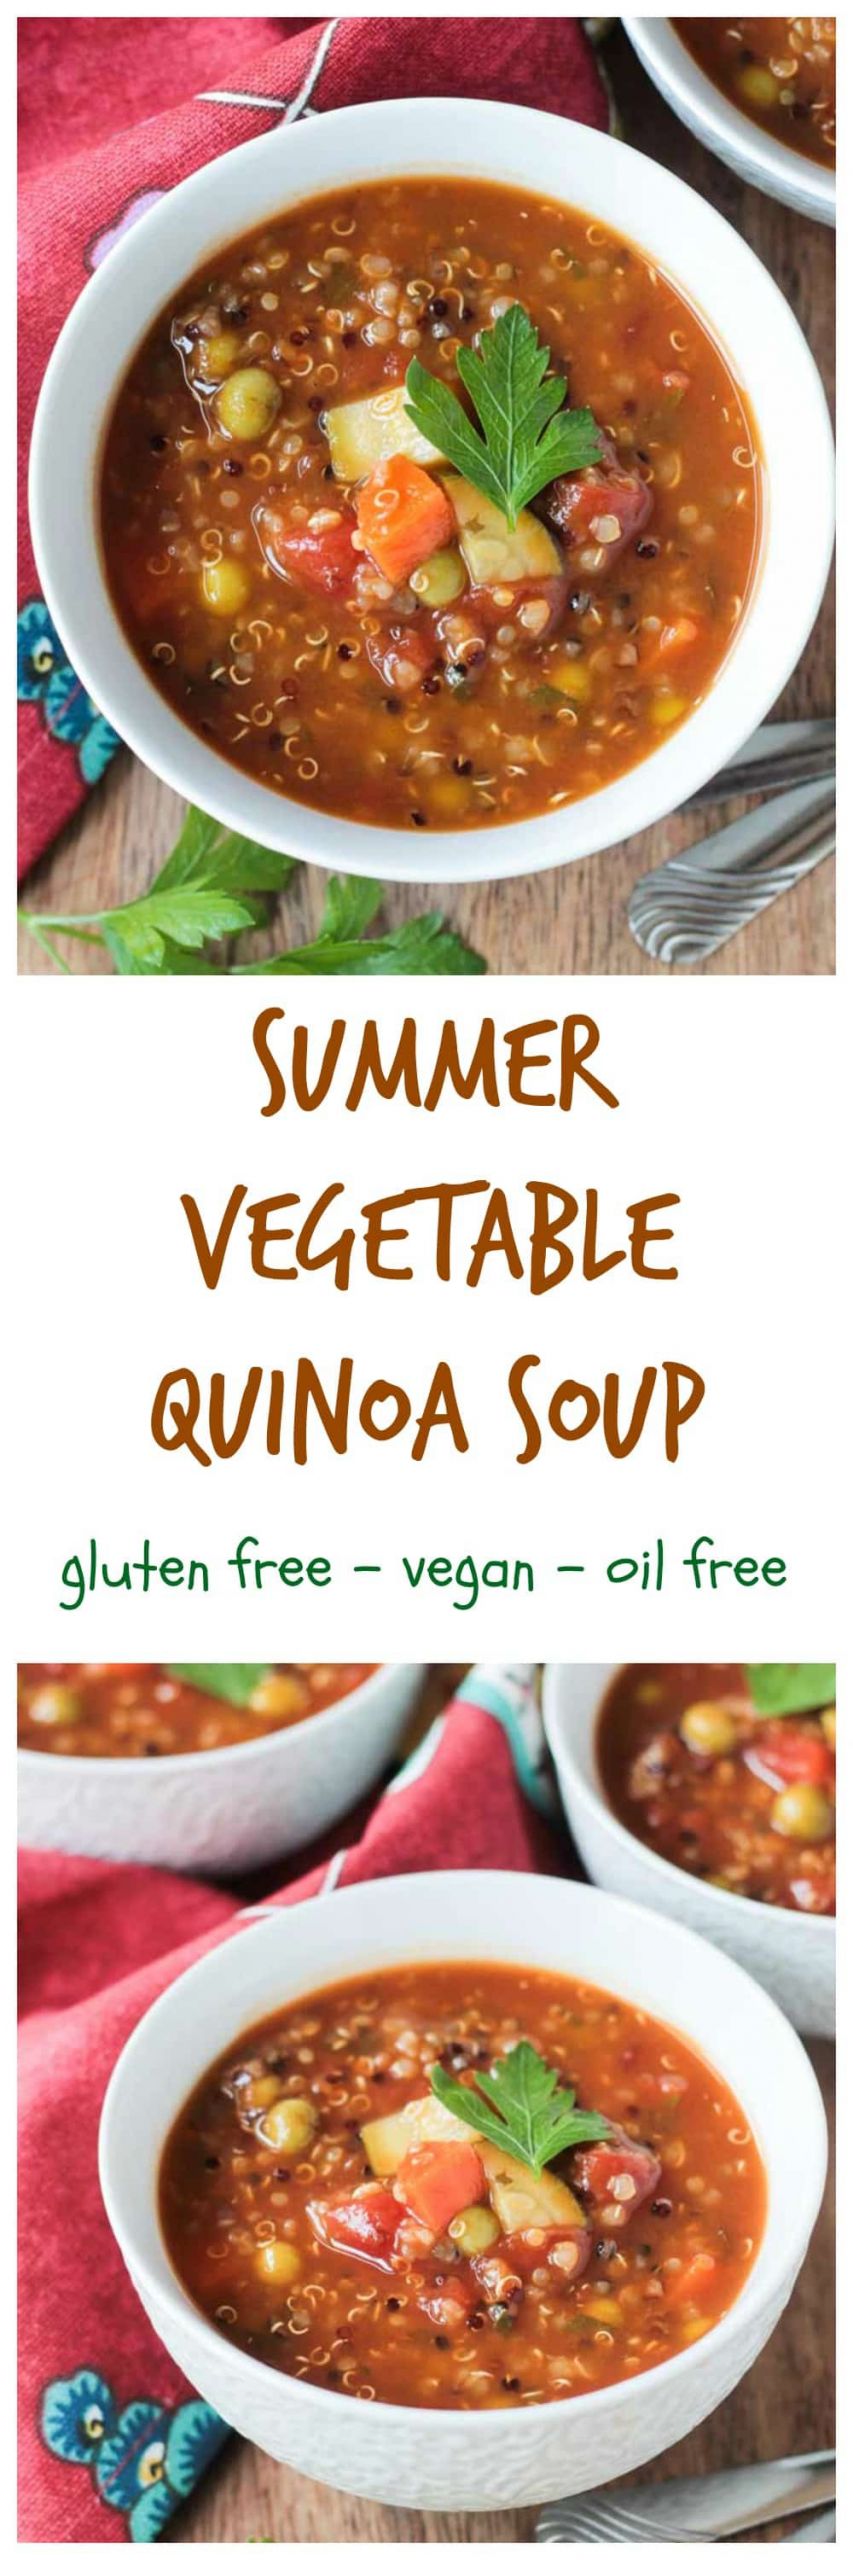 Quinoa Soup Vegetarian
 Quinoa Ve able Soup Dairy Free Gluten Free Veggie